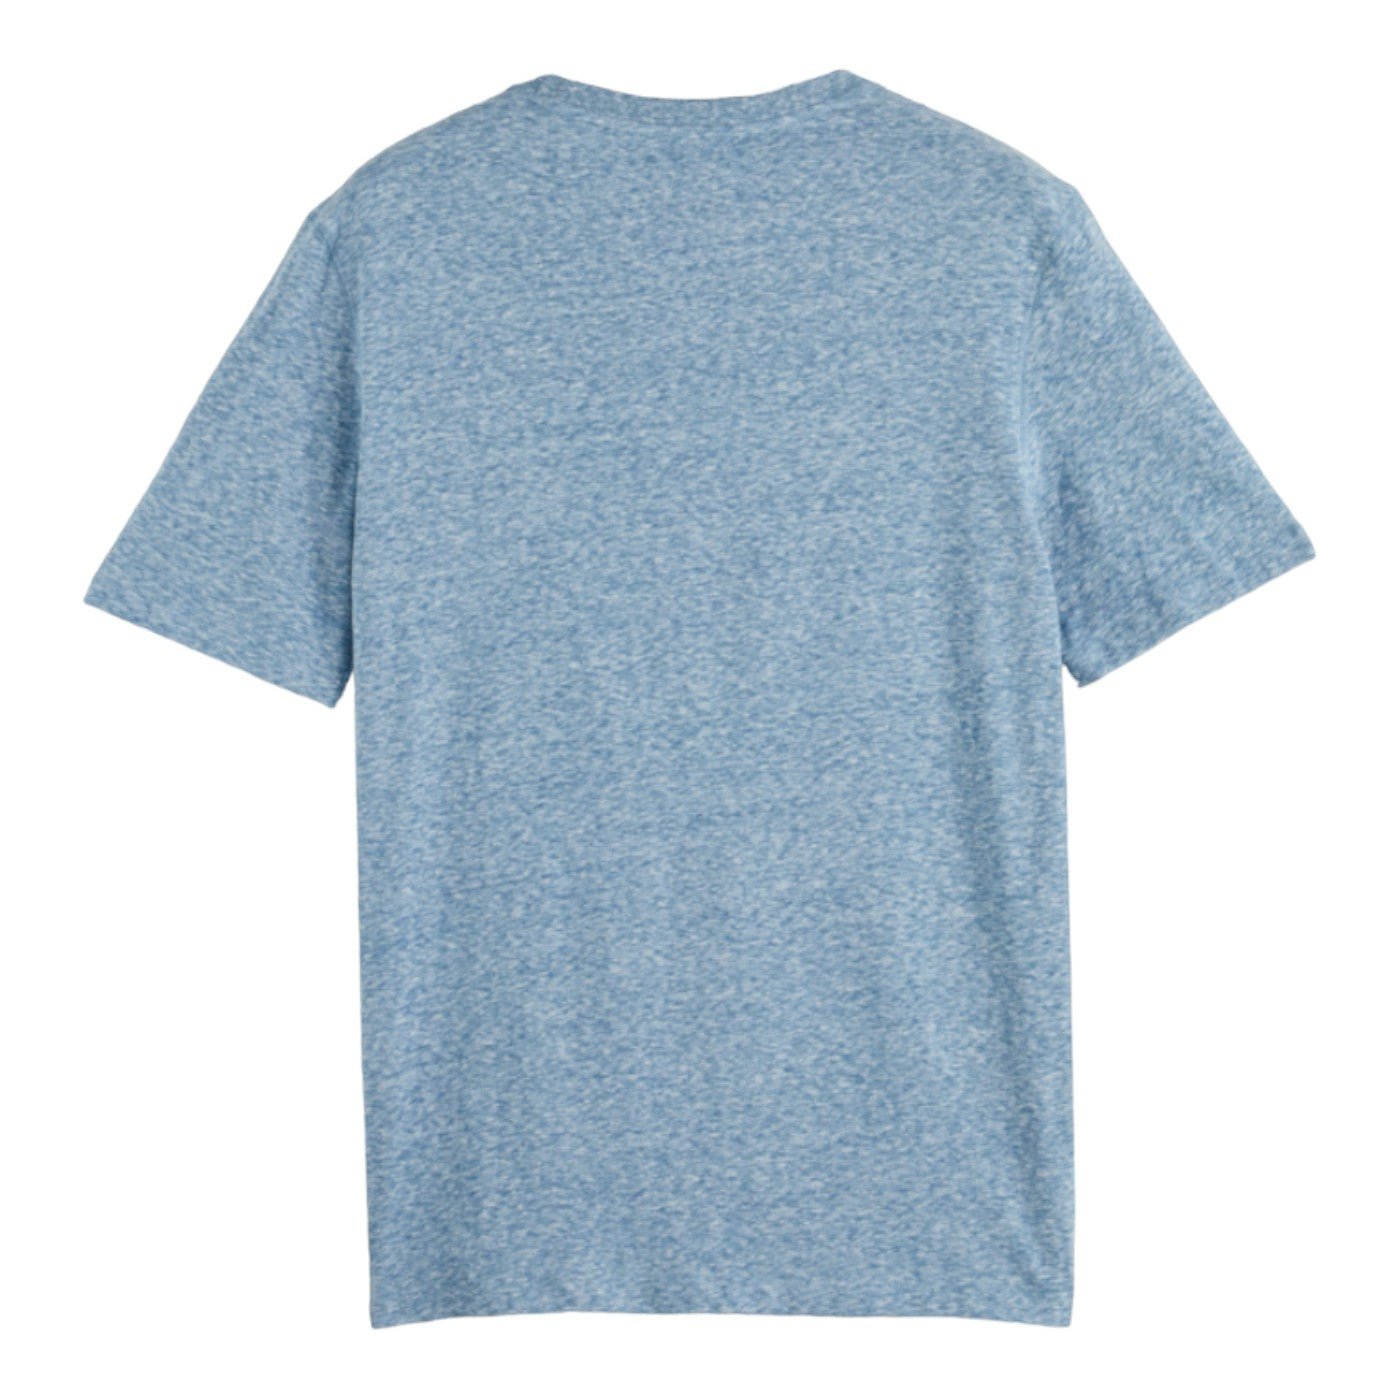 Light blue fitted tee shirt